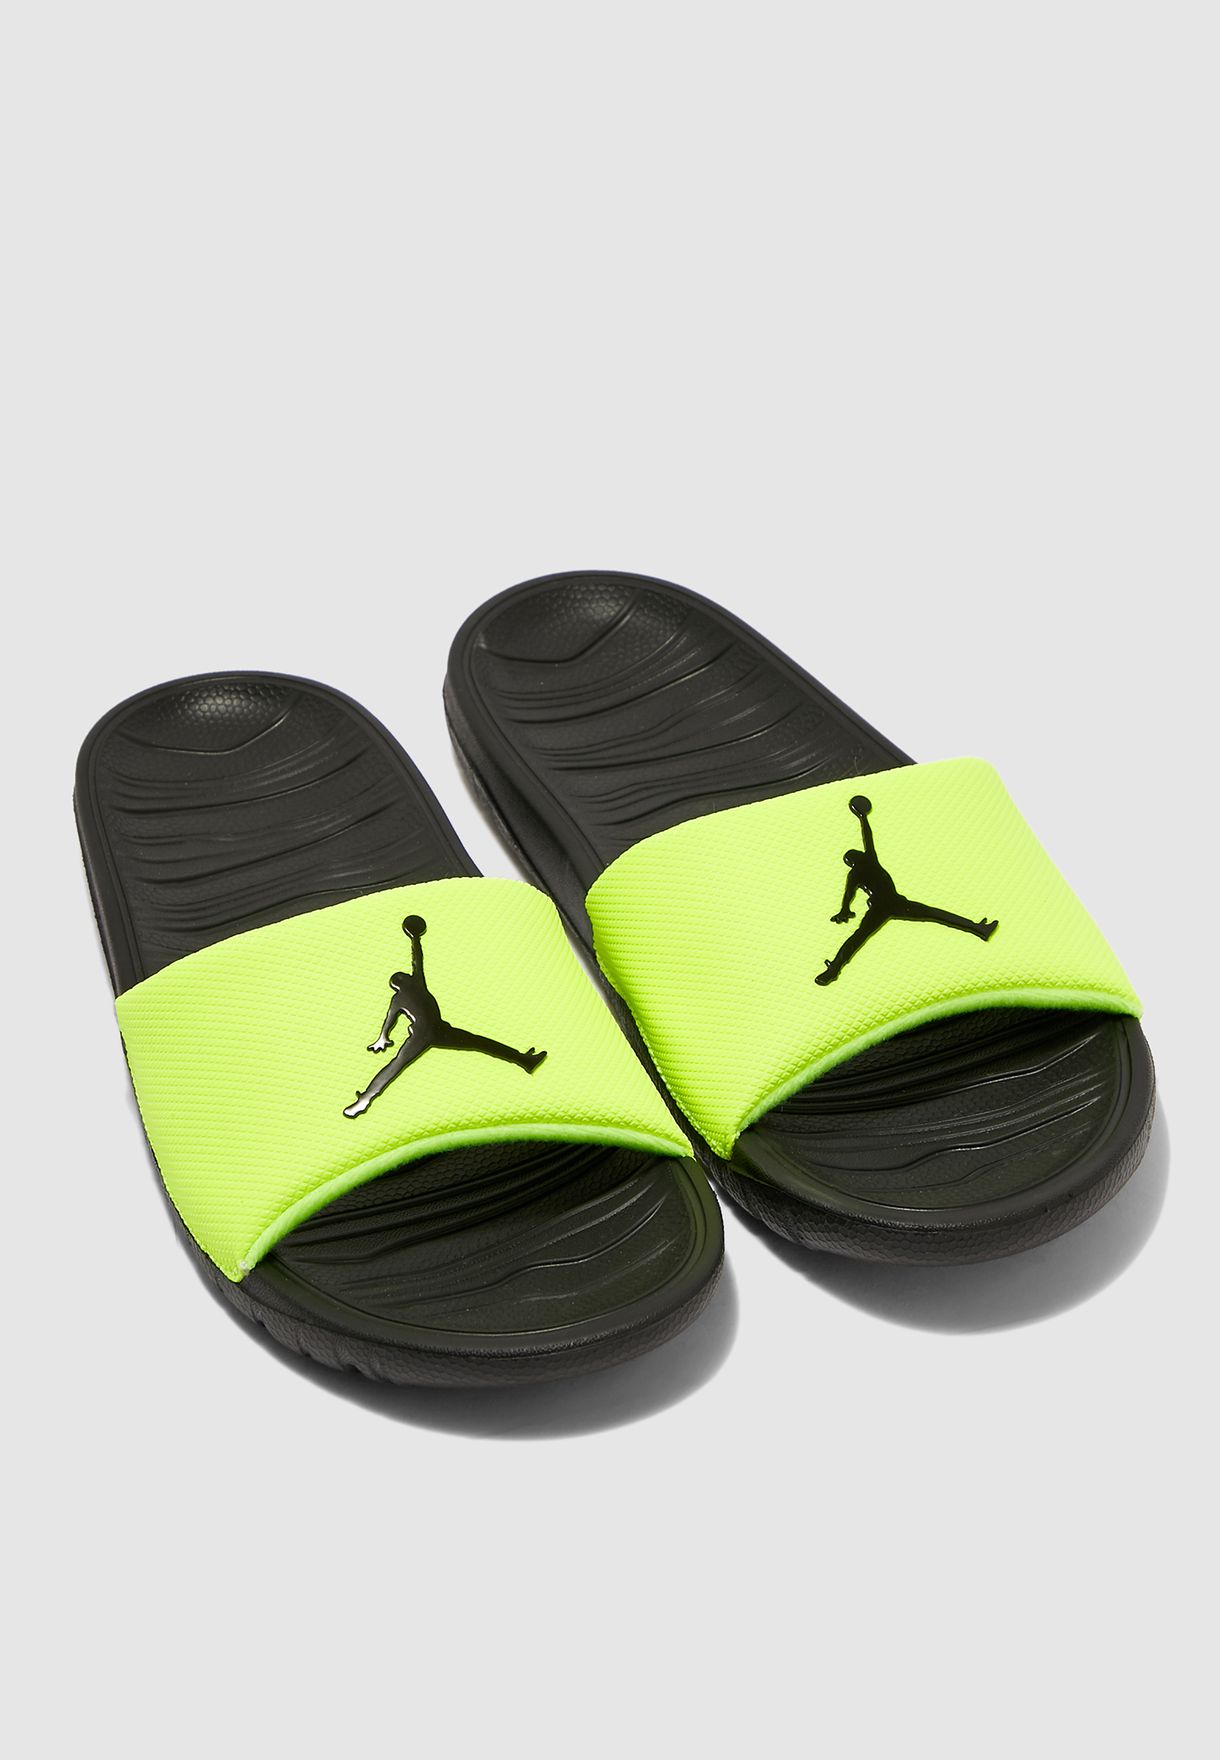 neon green nike sandals